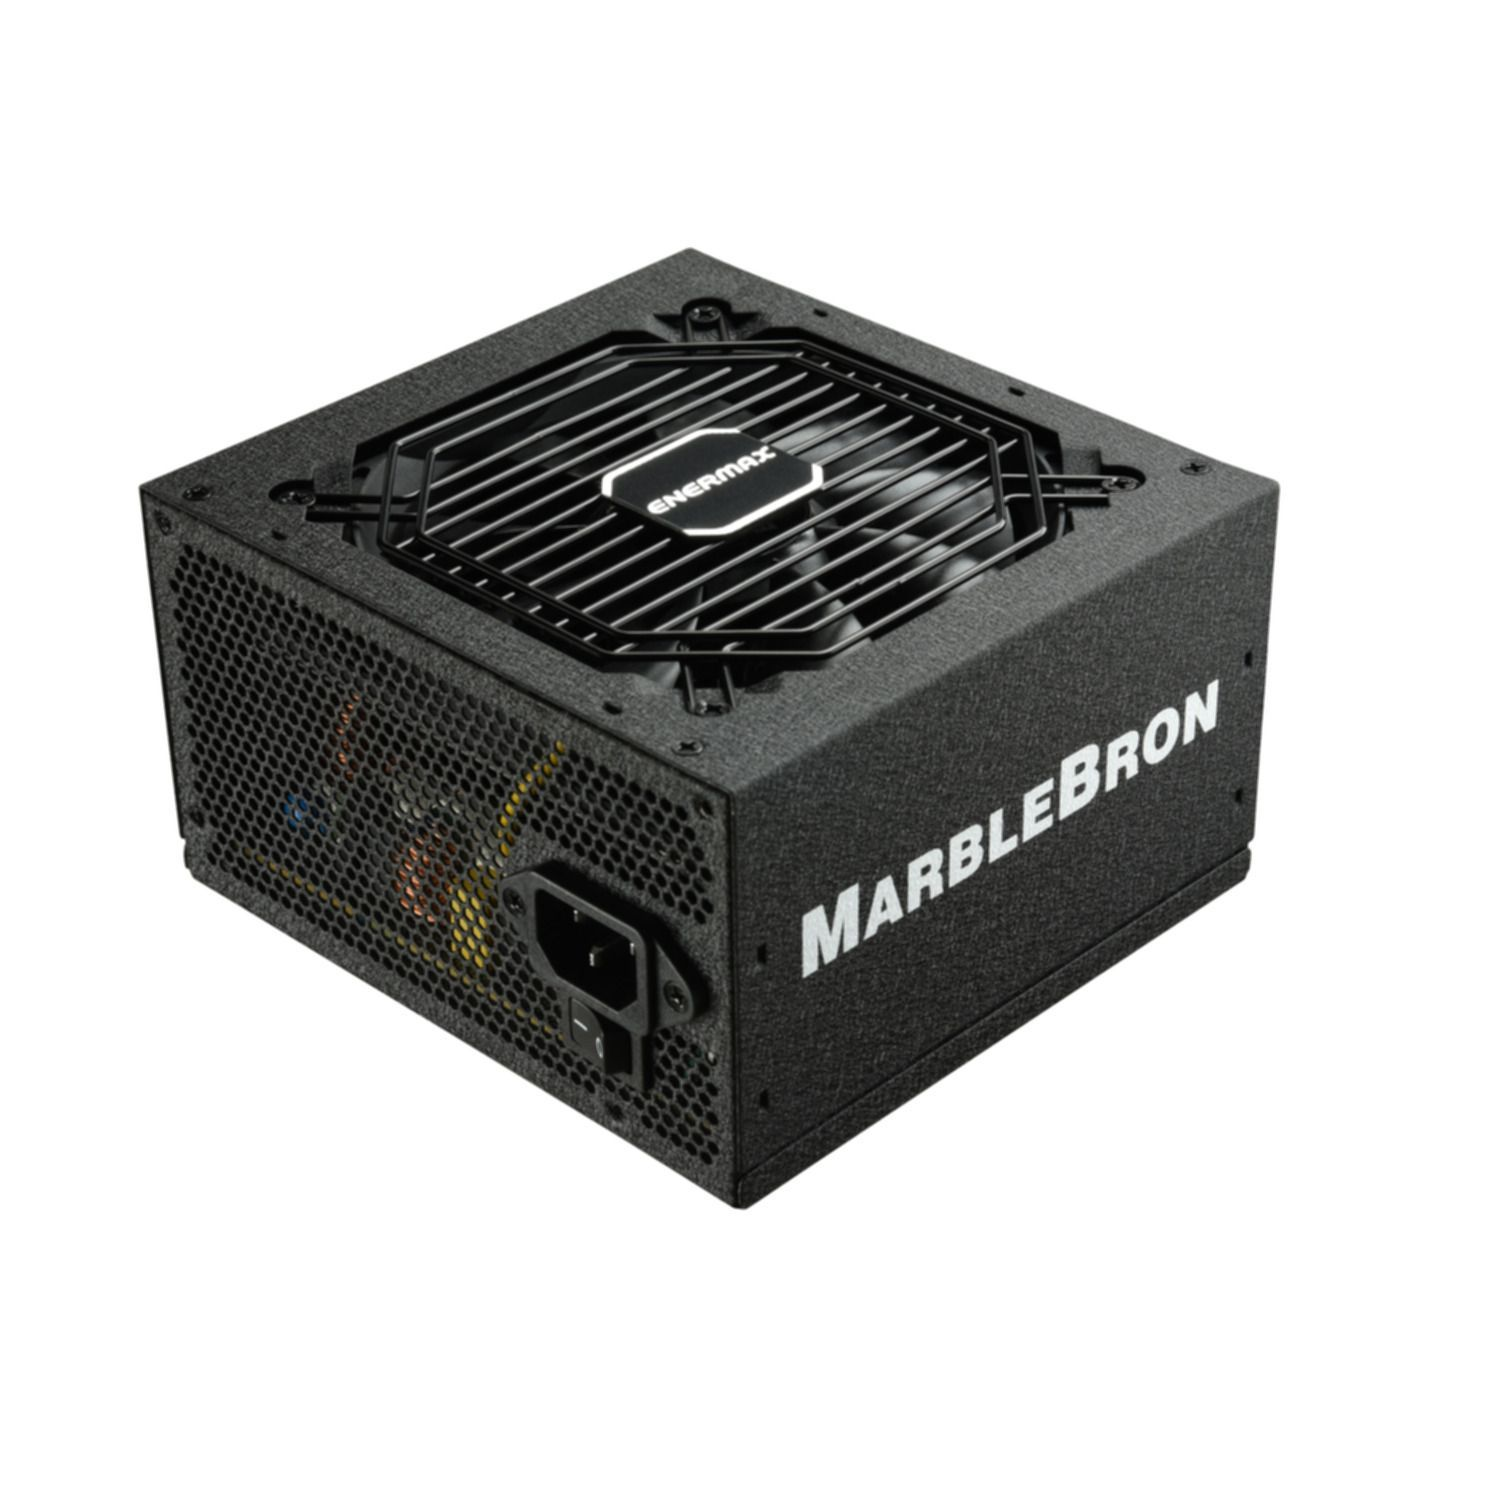 MARBLEBRON Watt 750 Netzteil PC ENERMAX